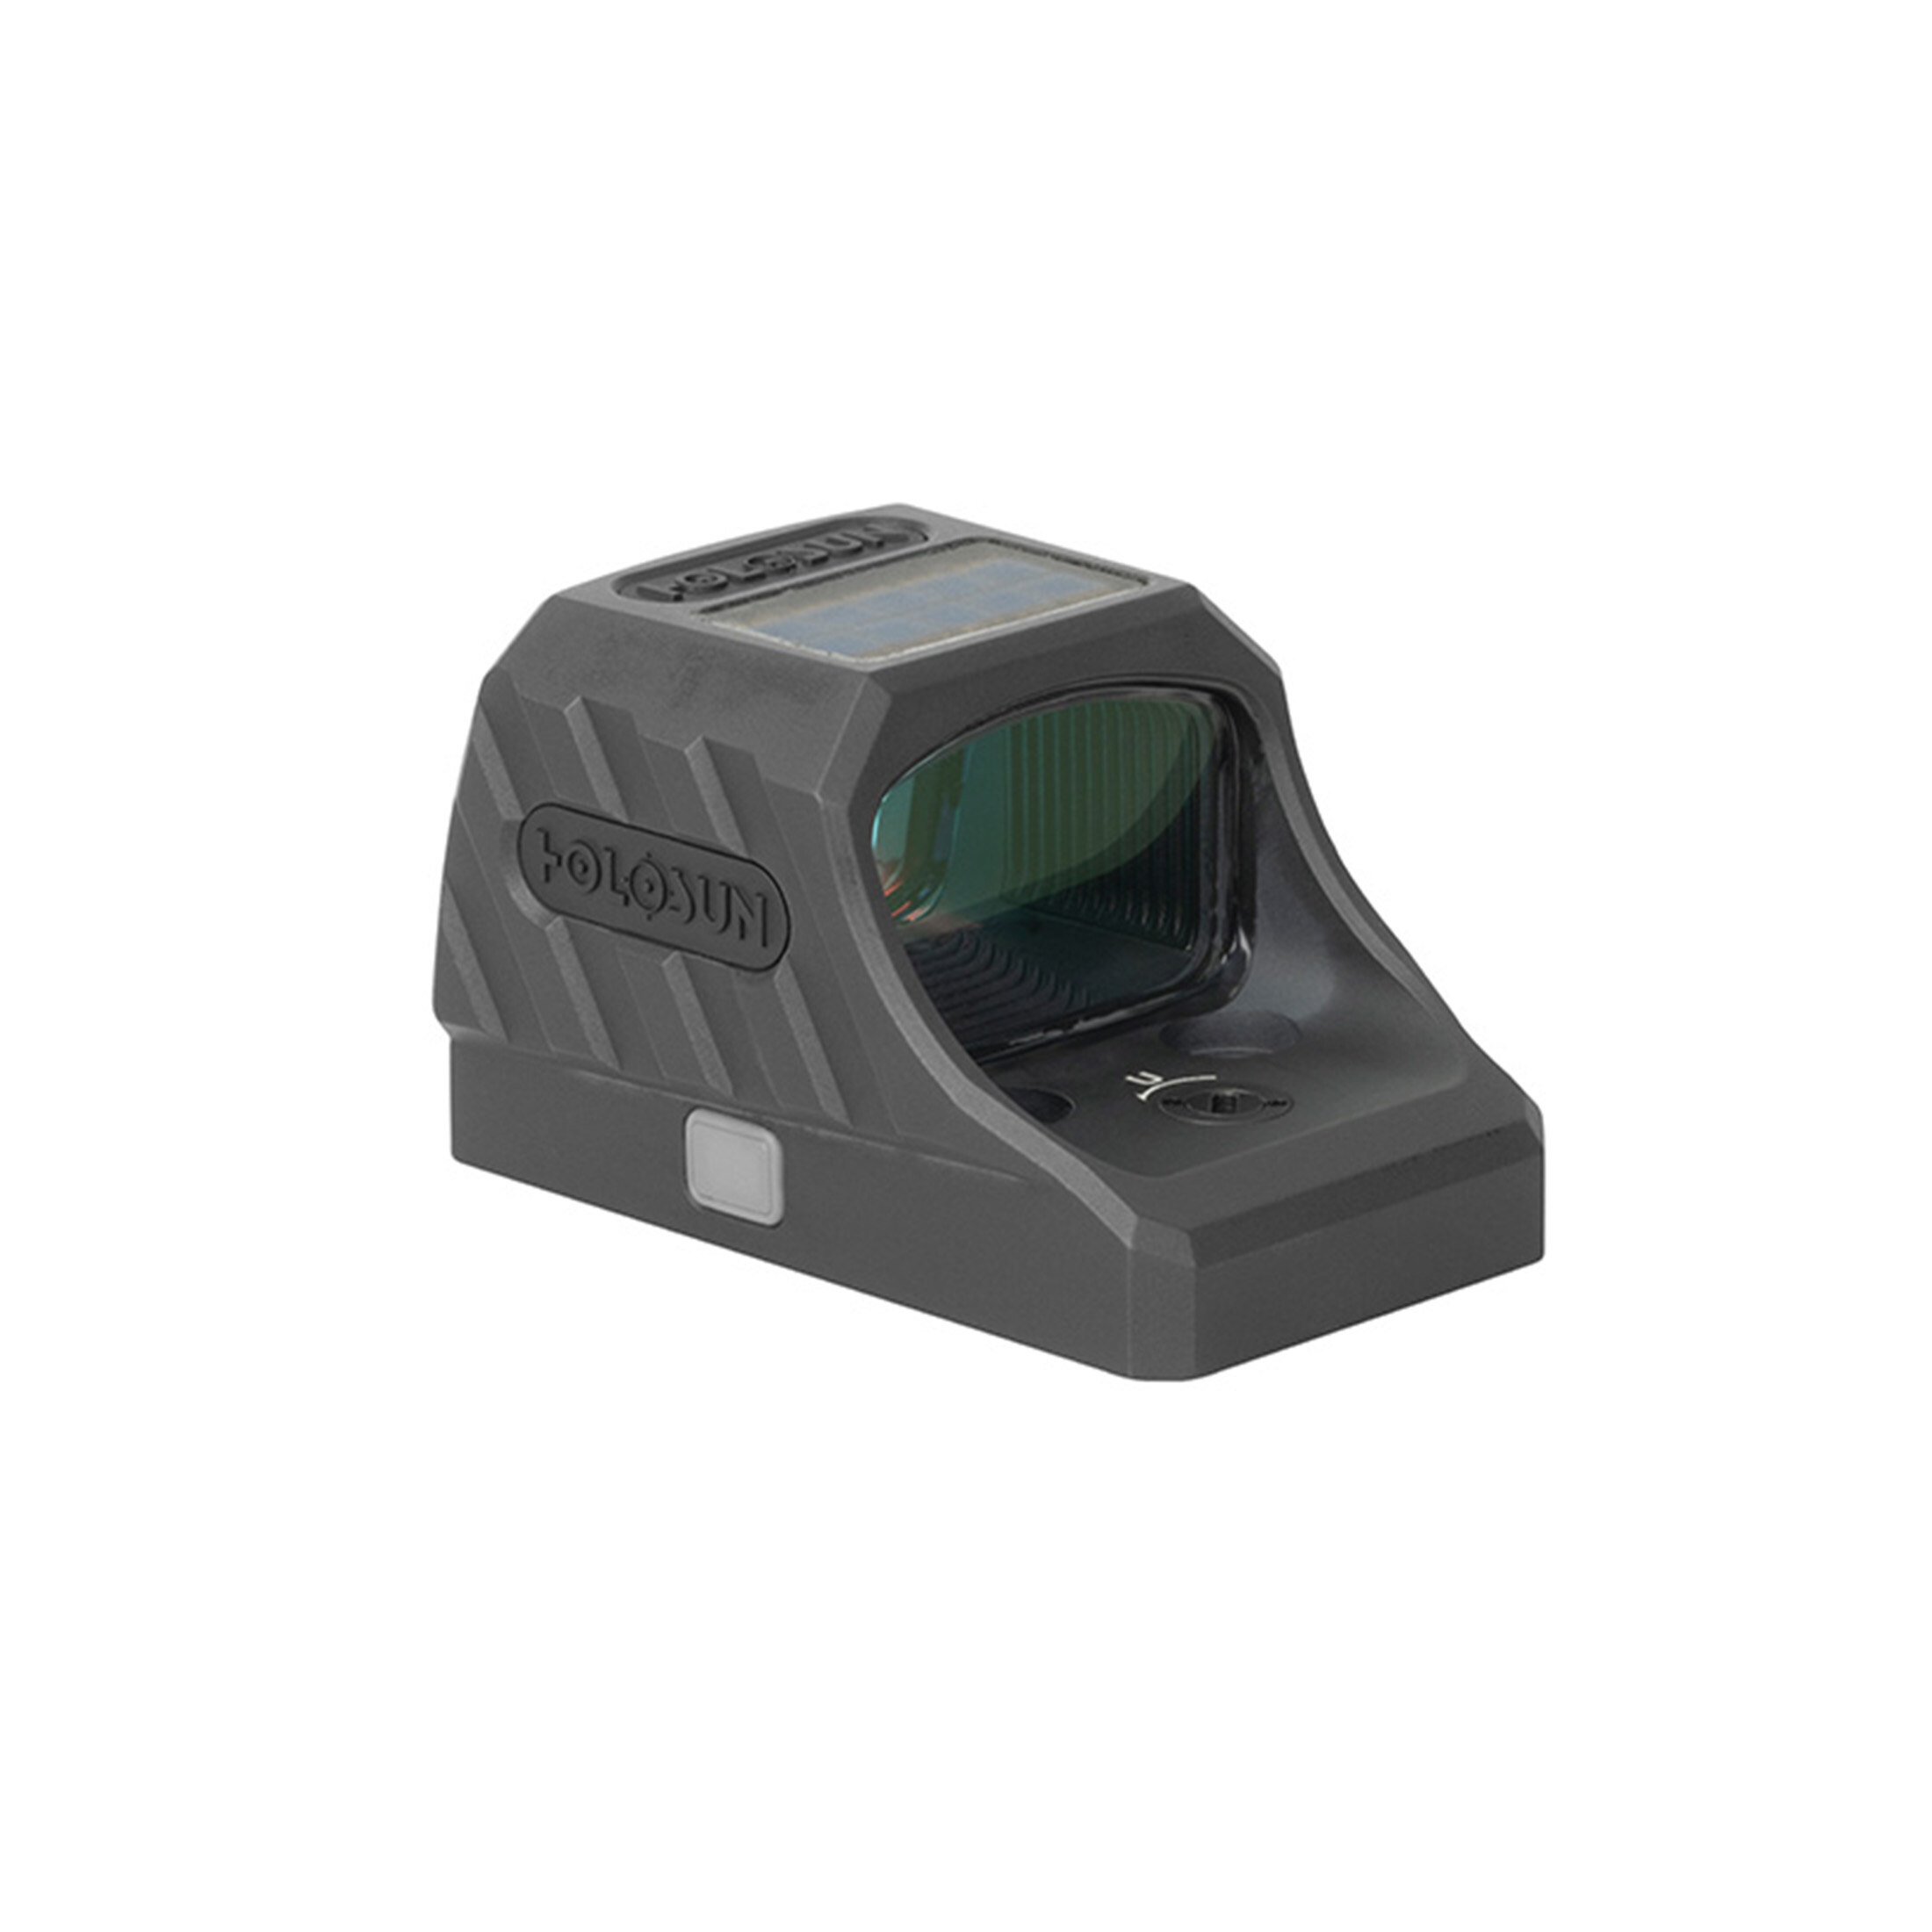 Holosun SCS-320-GR enclosed reflex green dot sight switchable 2MOA dot, 32MOA circle dot reticle so…